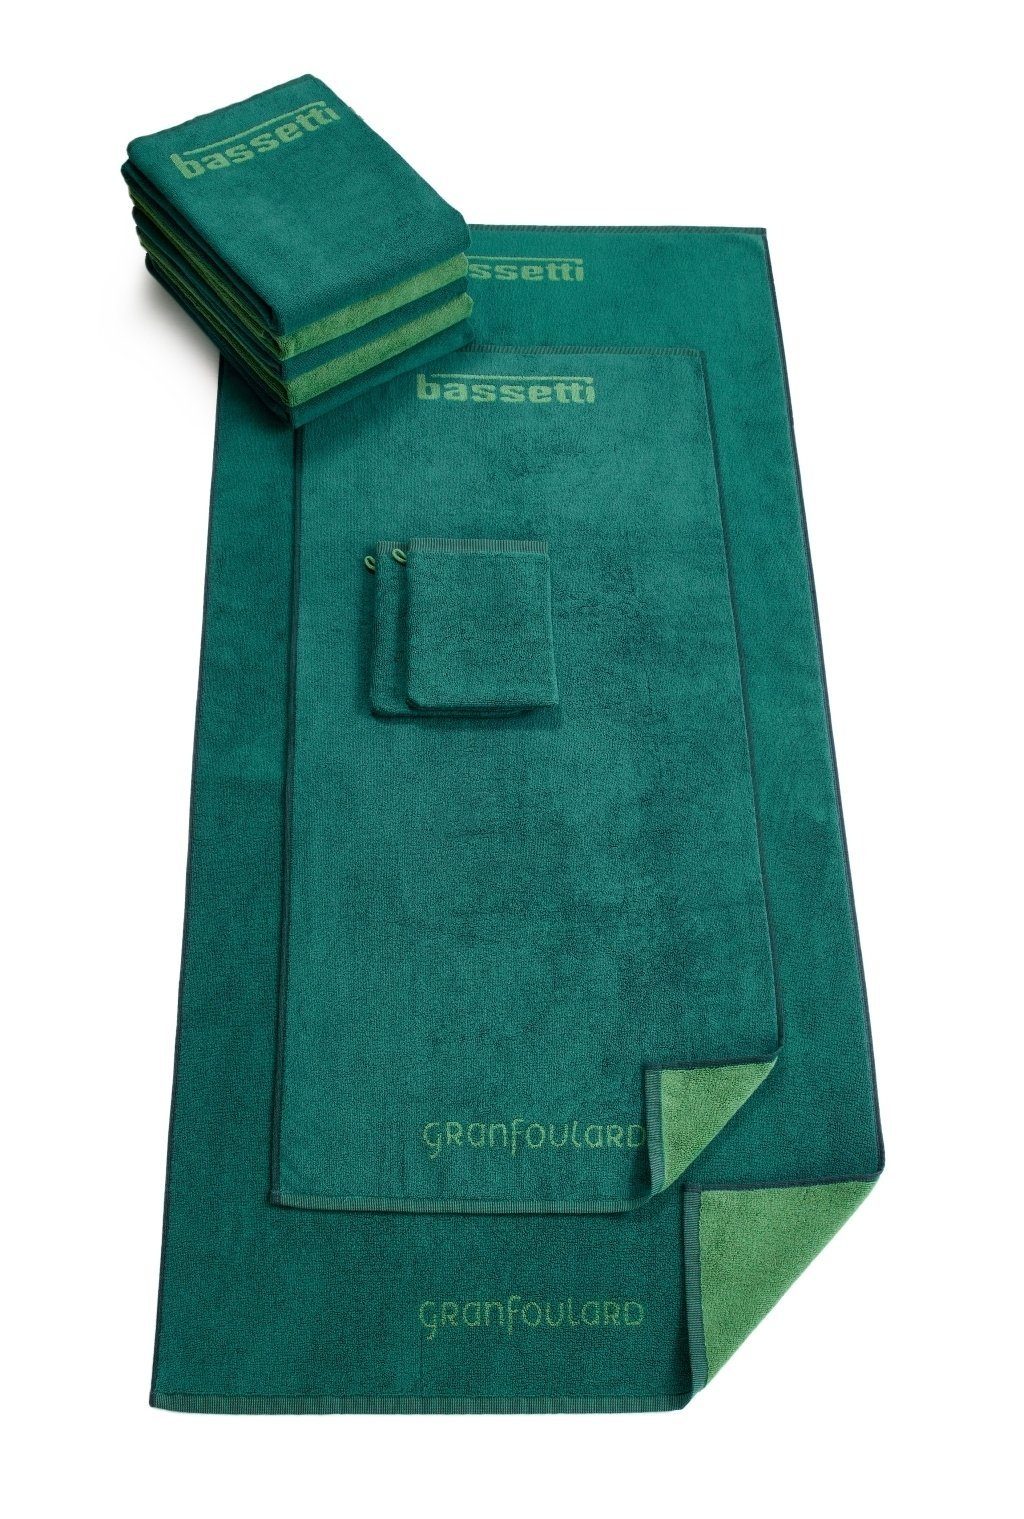 Handtücher besonders SHADES, grün saugstark Bassetti